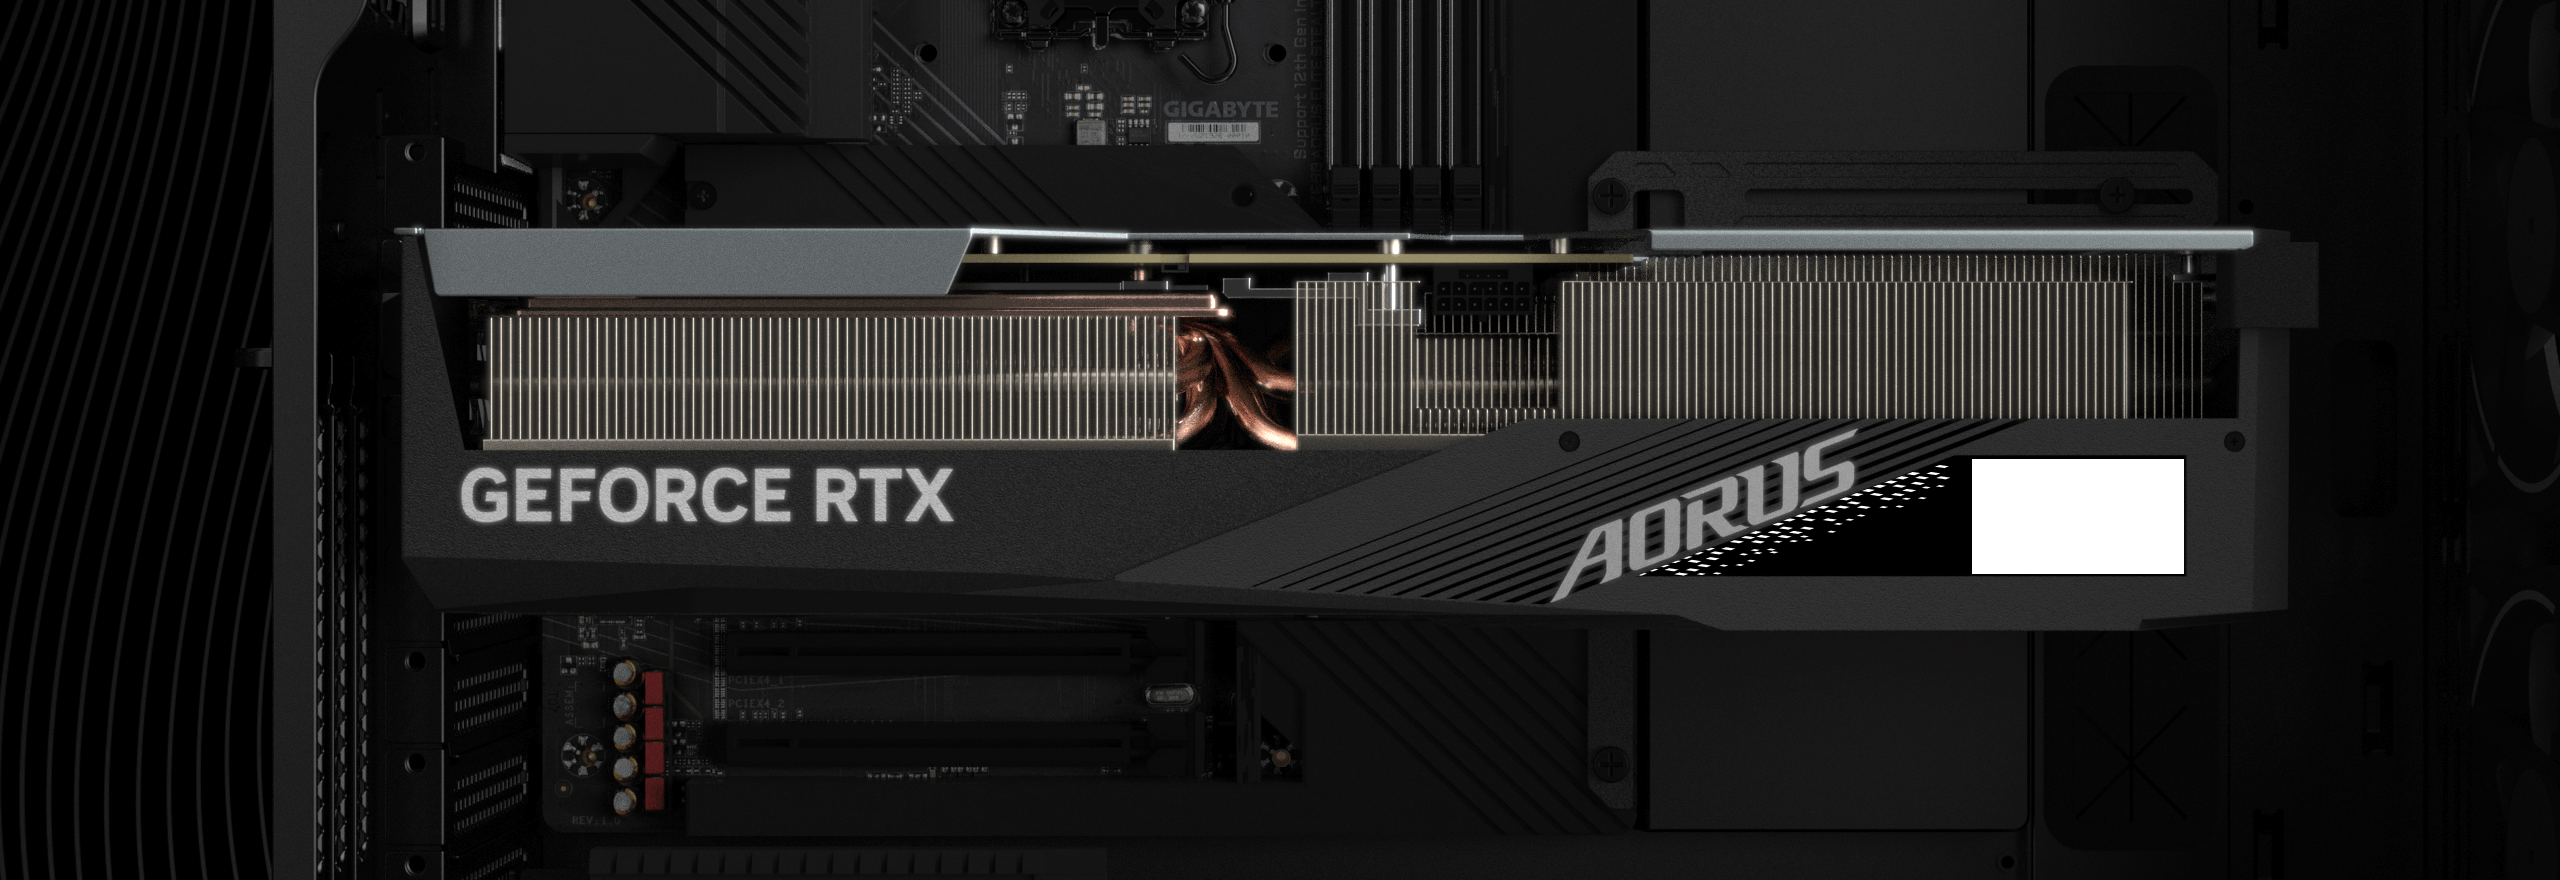 Rtx 4080 super aorus. RTX 4090 AORUS Master. RTX 4080 AORUS Master. AORUS GEFORCE RTX™ 4090 Master 24g. RTX 4090 GPU.